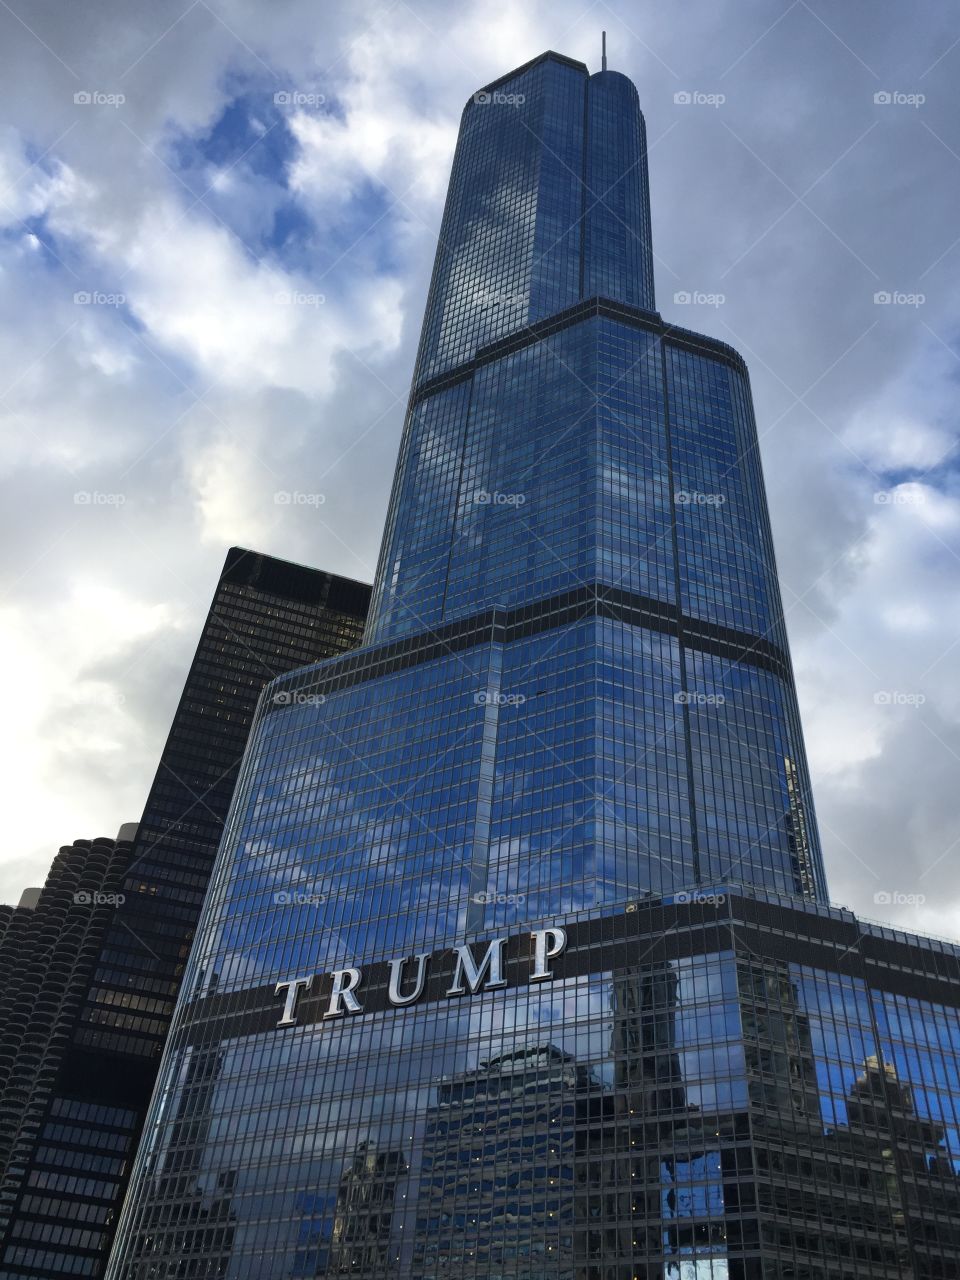 Trump Hotel in Chicago